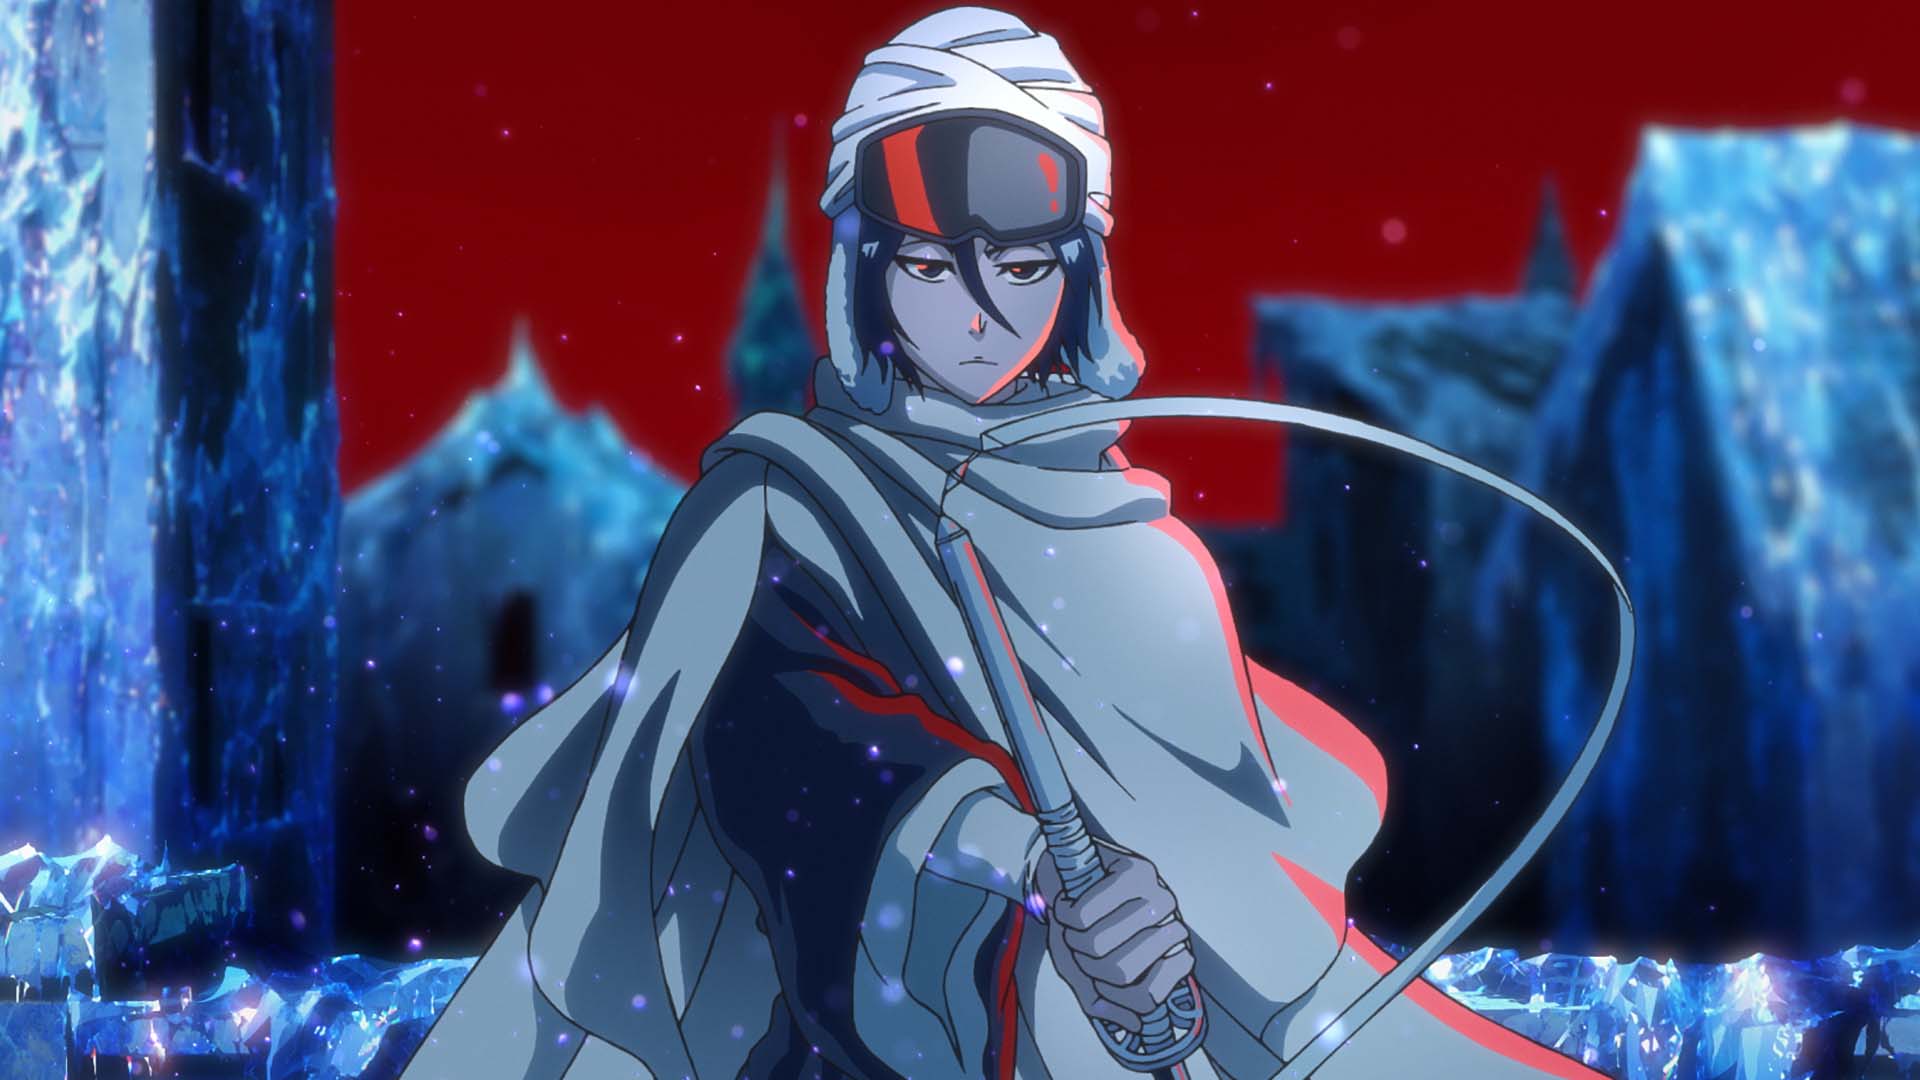 Bleach ThousandYear Blood War Anime Trailer, Key Visual Revealed